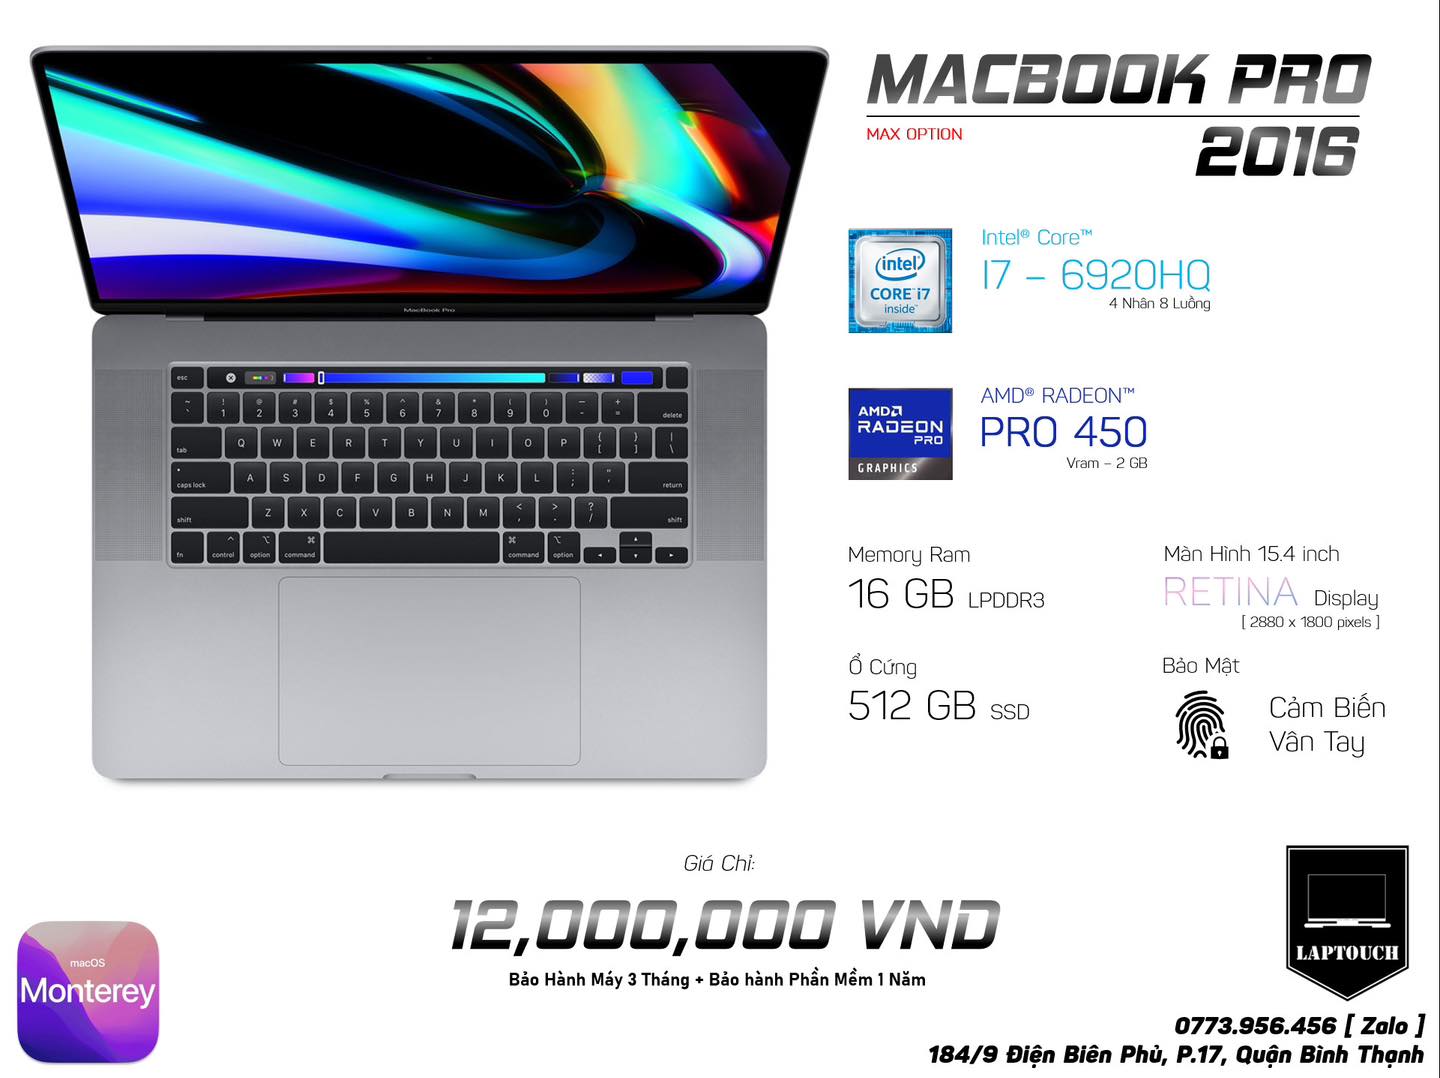 Macbook Pro 15 TouchBar [ 2016 - Max Option ]